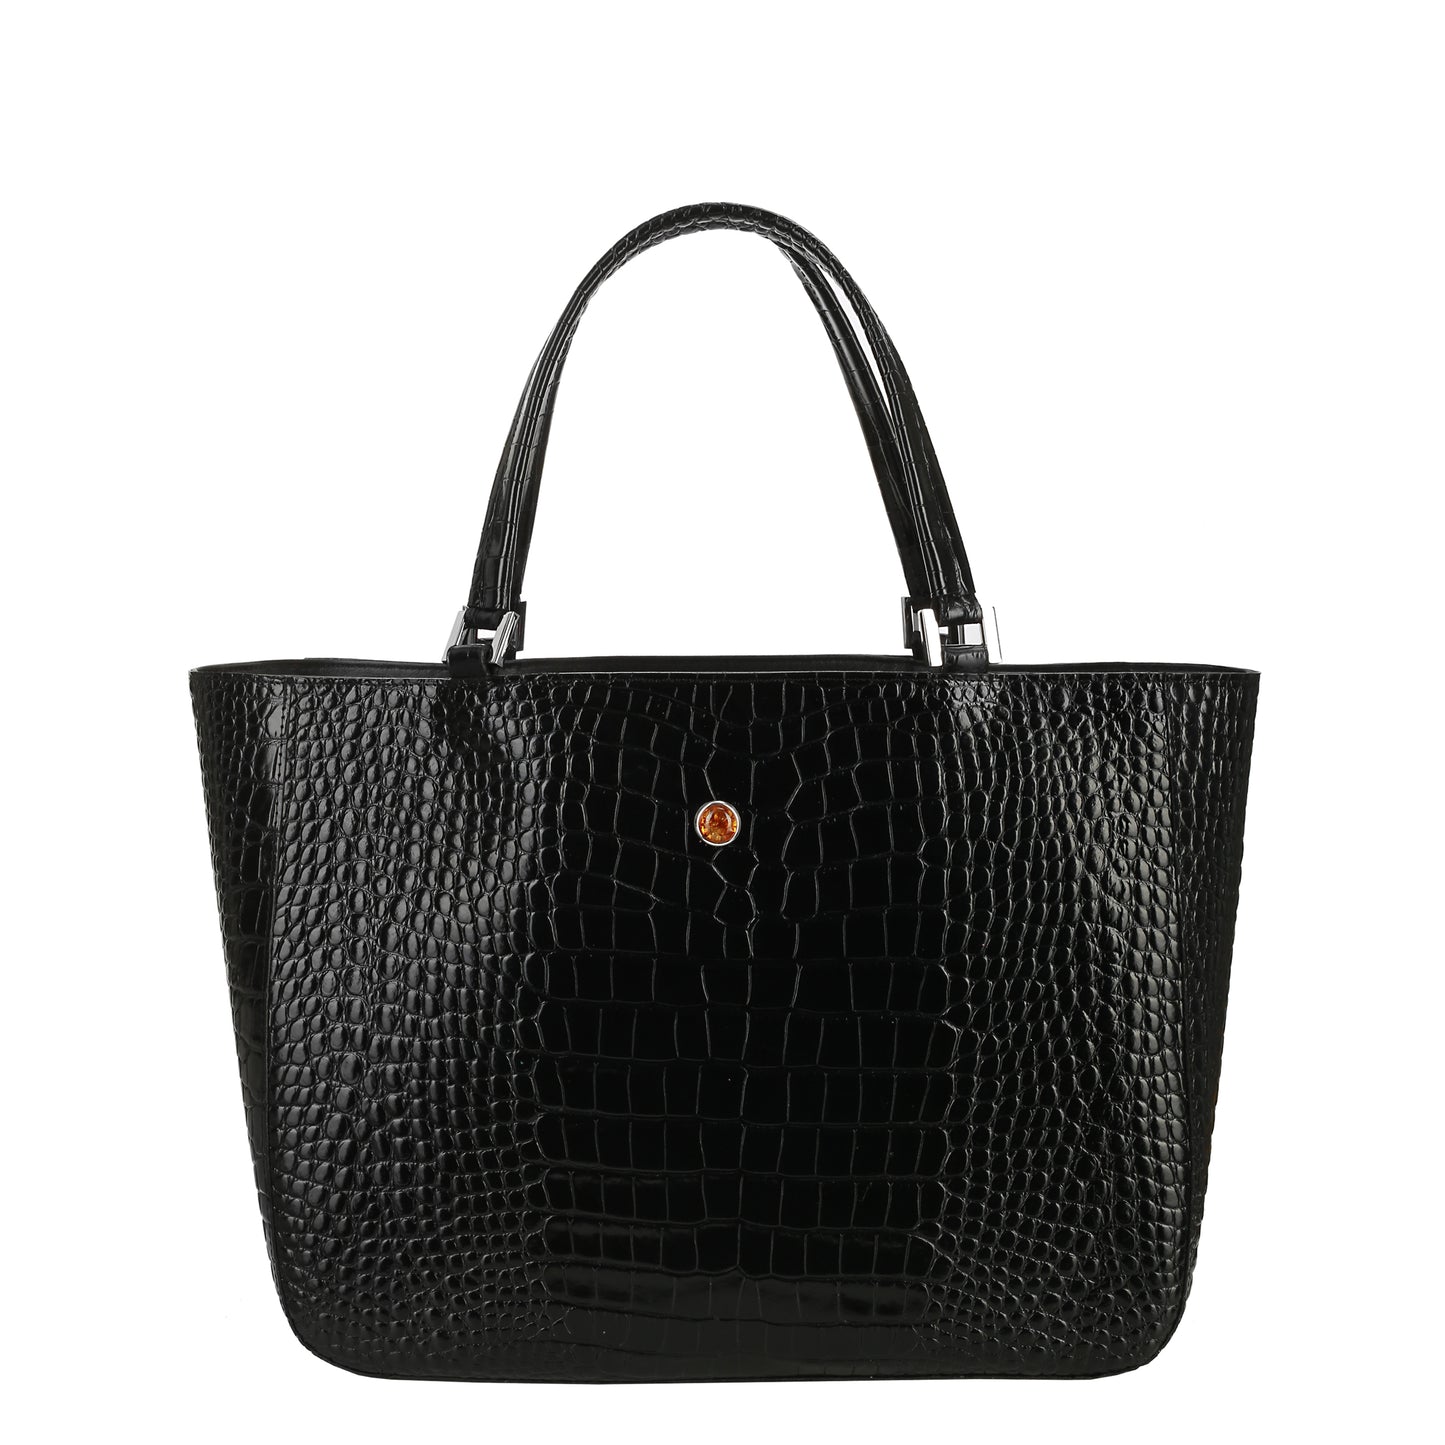 MAMMA croco black women's leather handbag